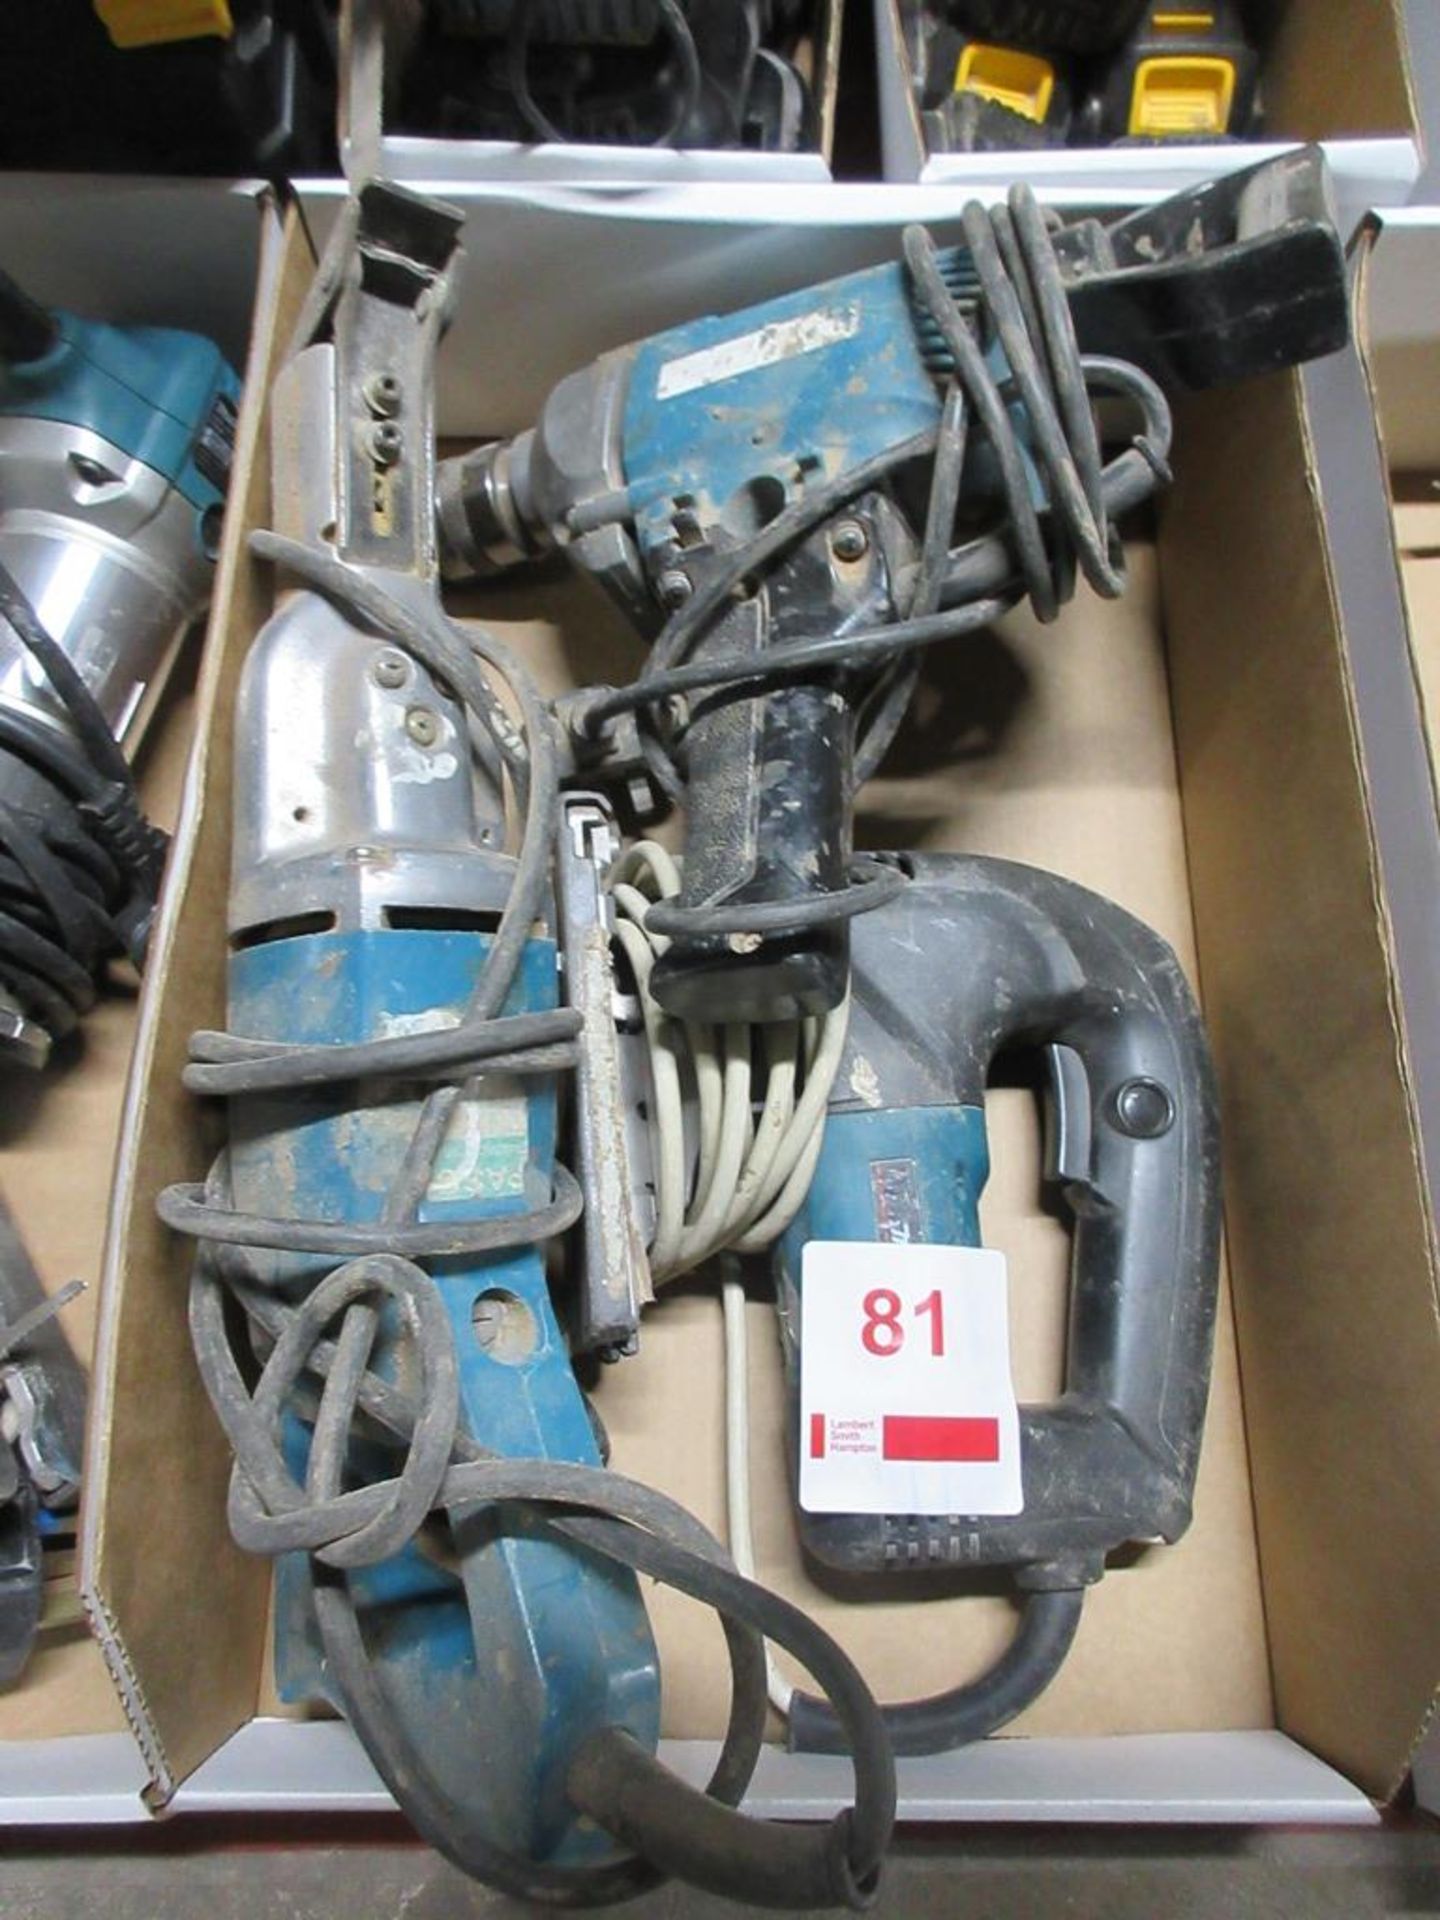 3 x assorted power tools including Makita drill, Makita reciprocating saw, Makita jigsaw, 240v